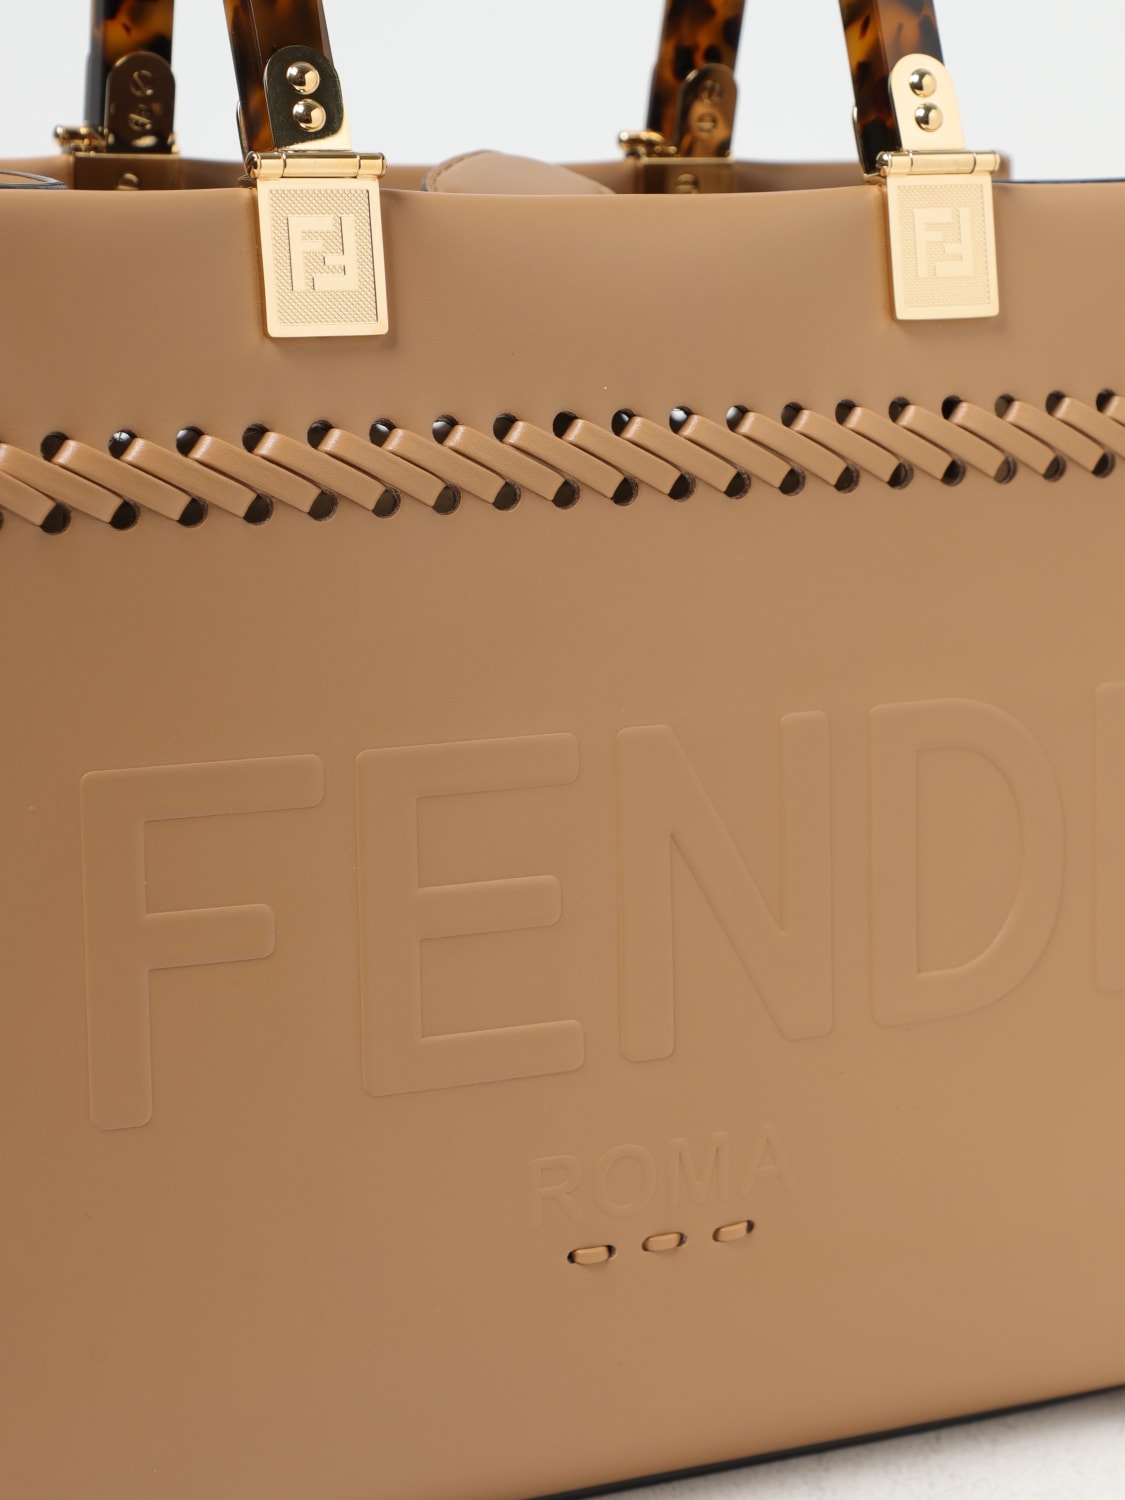 FENDI: Sunshine bag in leather with embossed logo - Beige